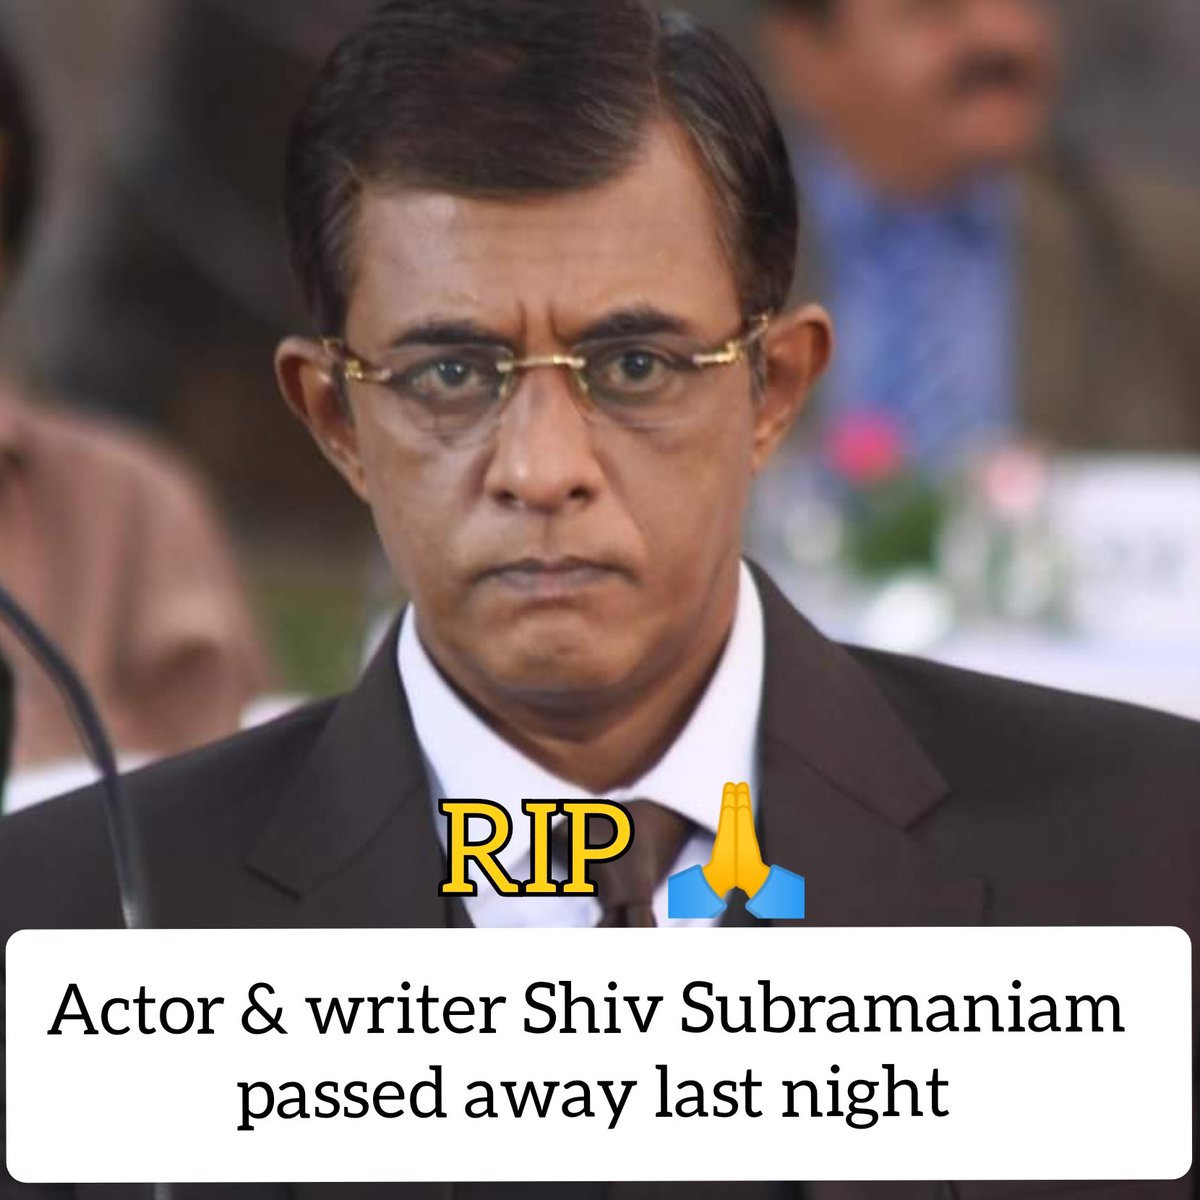 Actor and screenwriter #ShivSubramaniam passed away last night

He wrote #Parinda, 1942 A Love Story, Is Raat Ki Subah Nahi, #Chameli & Hazaaron Khwaishein Aisi

As an actor he did Prahaar, DrohKaal, Kaminey, #2States, #Hichki, Tu Hai Mera Sunday & Meenakshi Sundareshwar

RIP 🙏